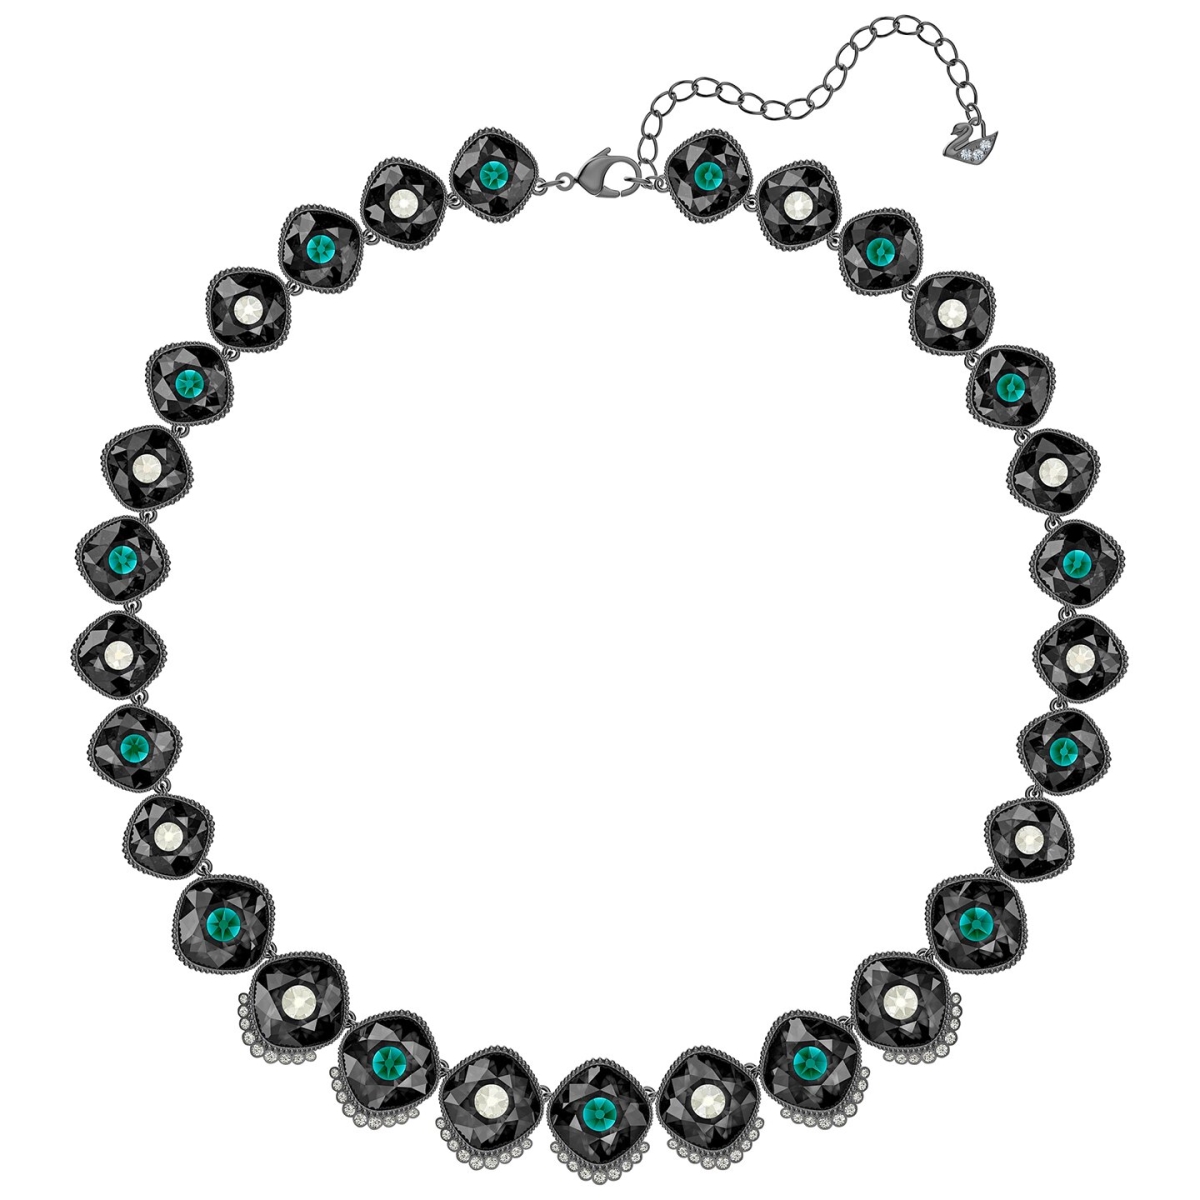 5490986 Black Baroque Ruthenium Plated Necklace - Multi-color